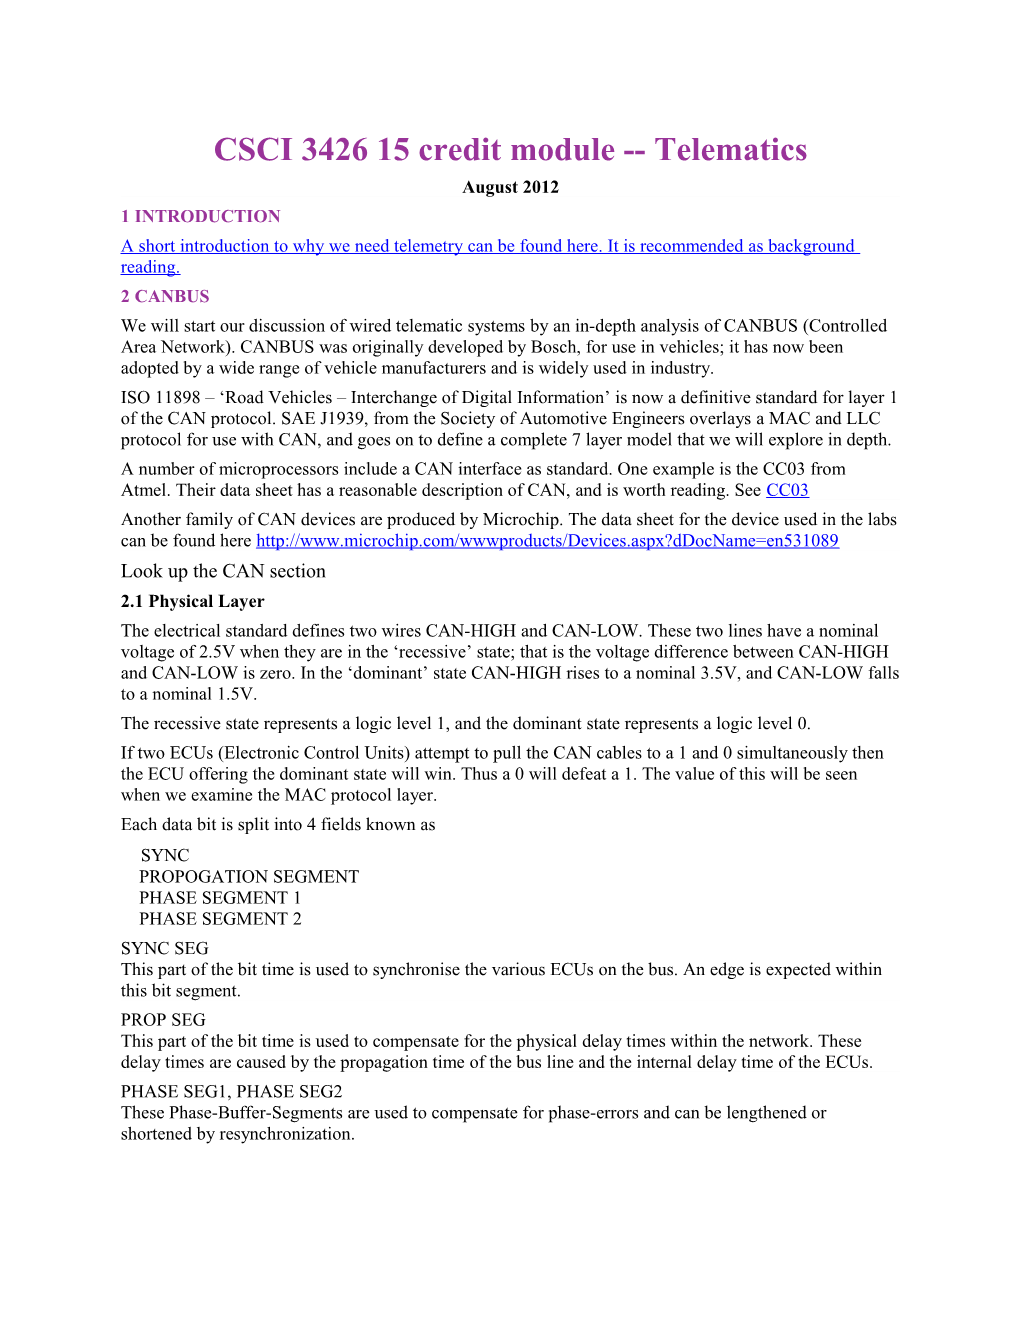 CSCI 3426 15 Credit Module Telematics